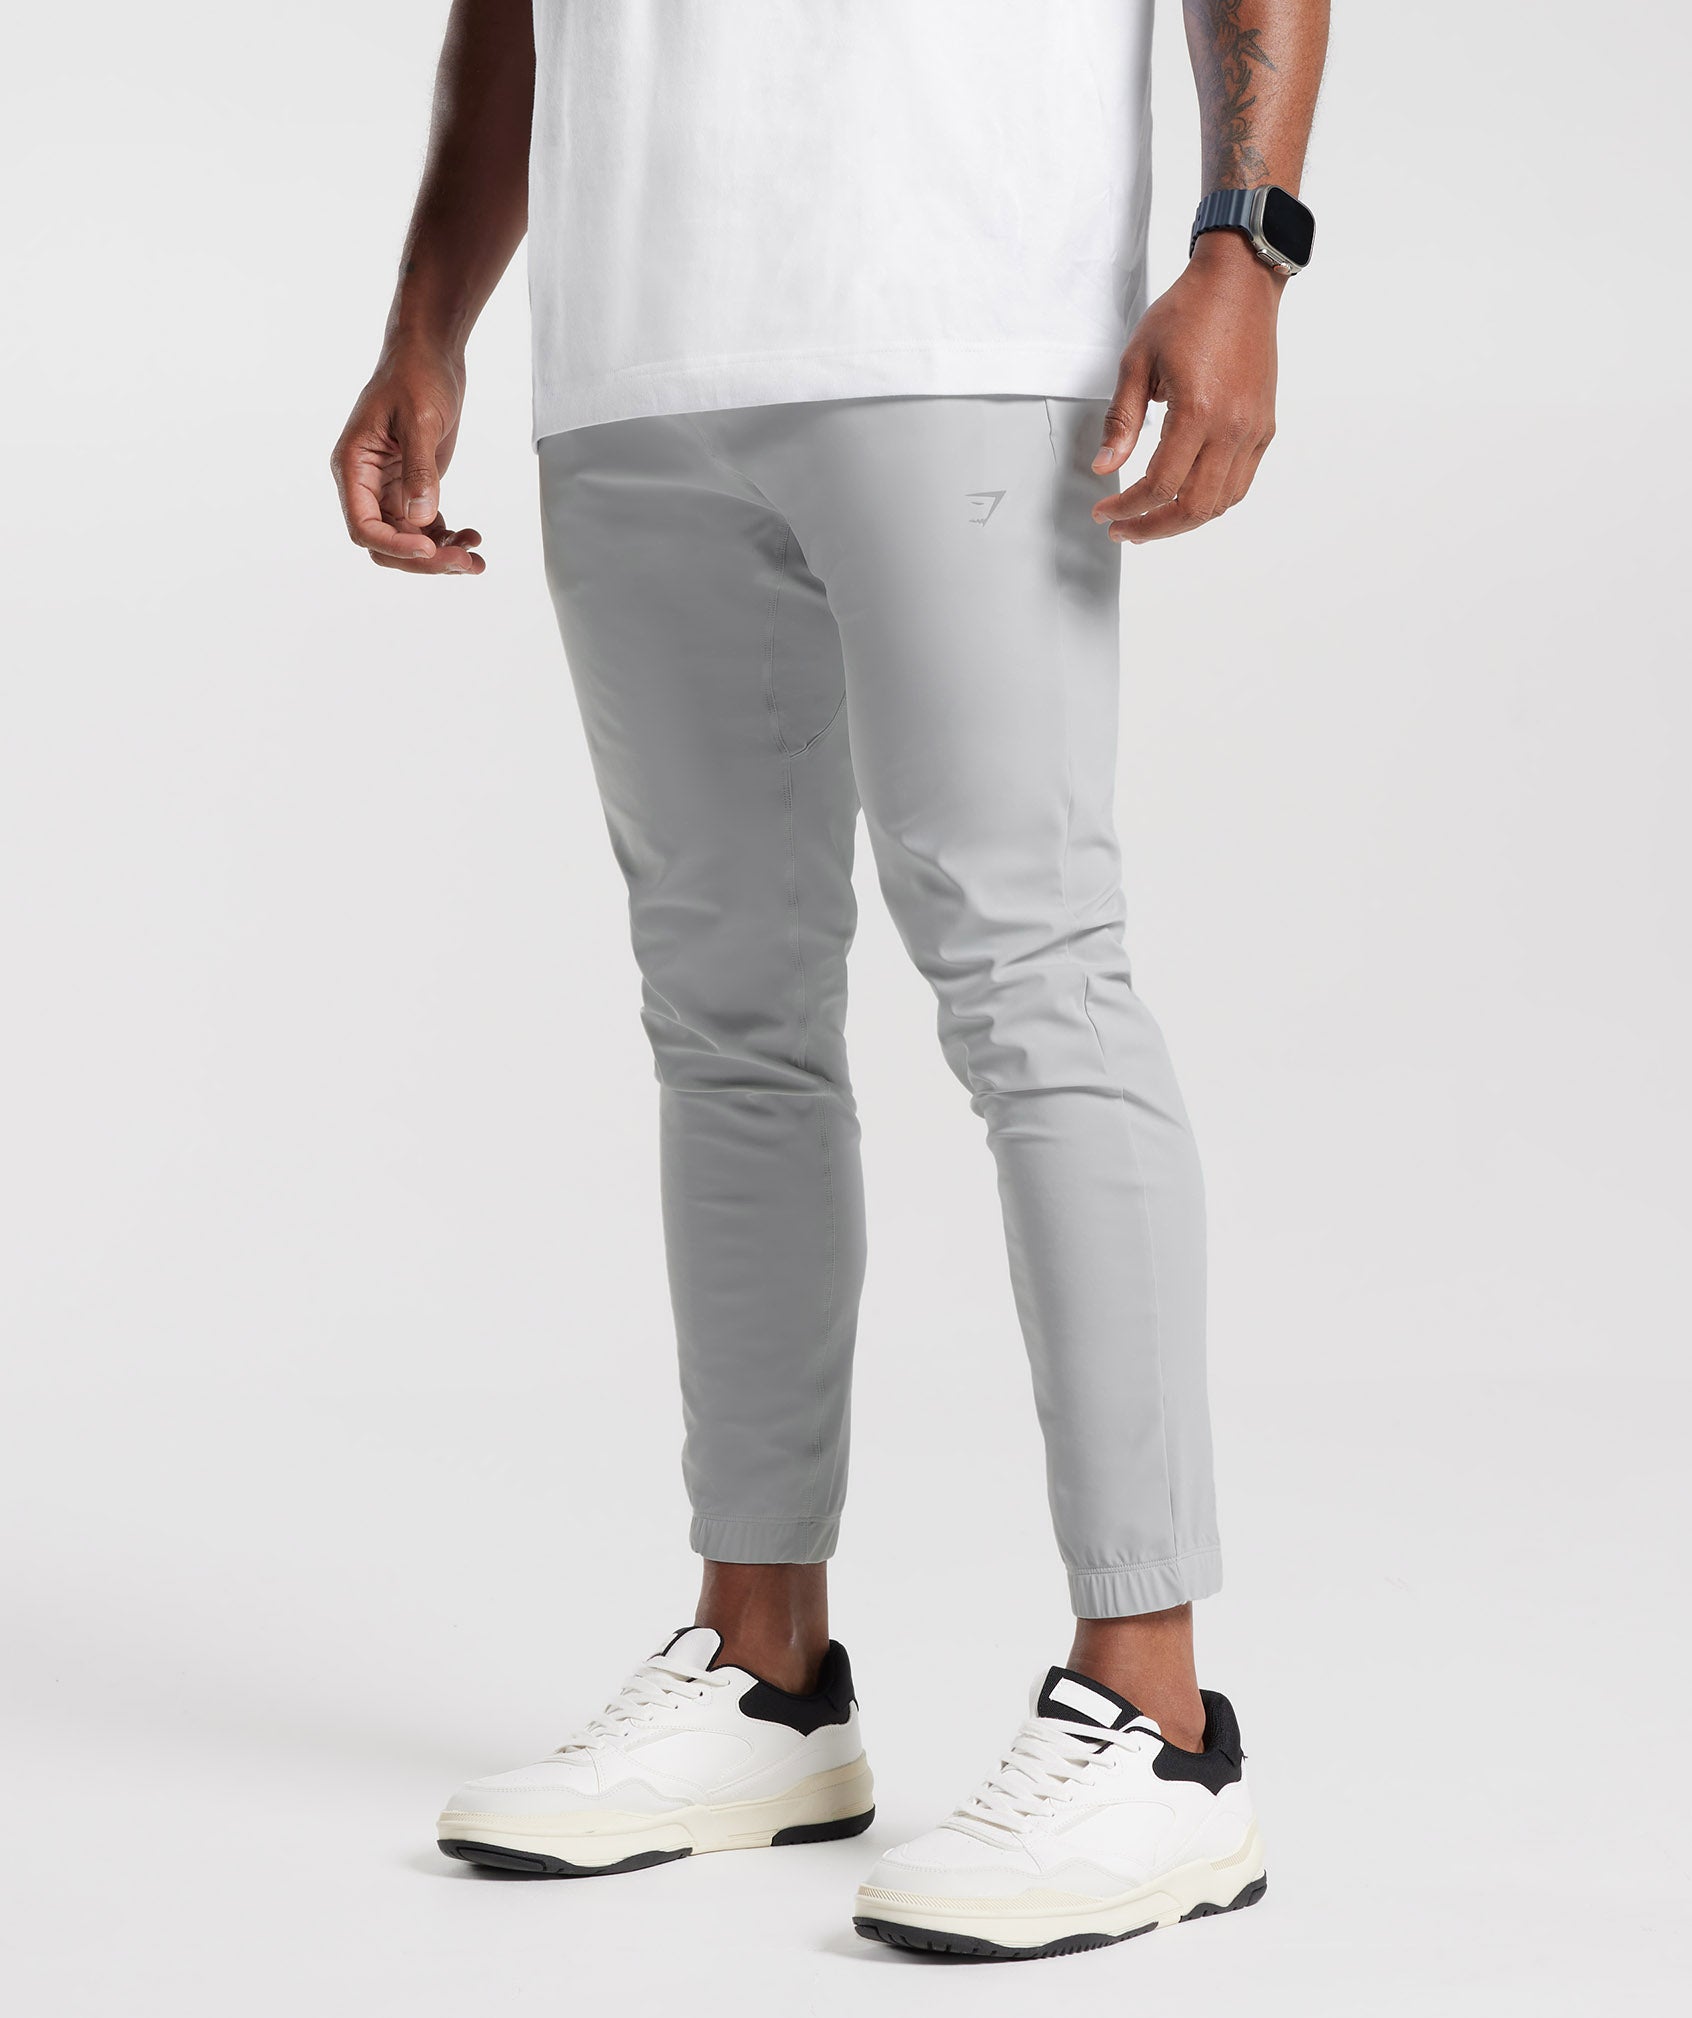 Gymshark Men's Crest Joggers Sweatpants in Light Grey Slim Fit Size XL